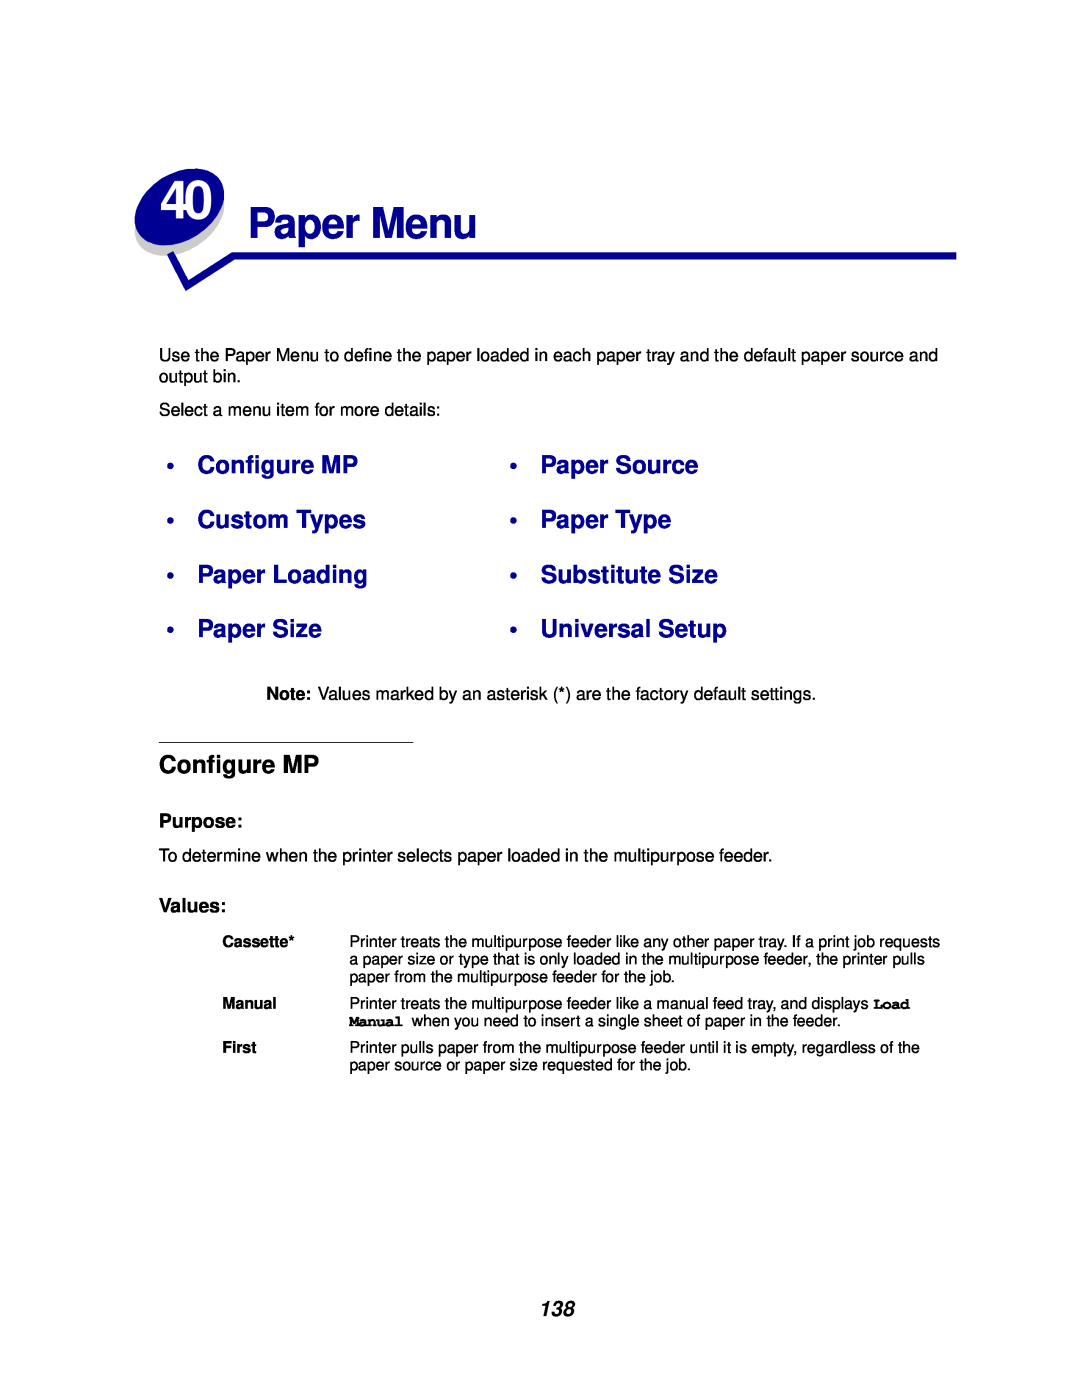 Lexmark 812 manual Paper Menu, Configure MP, Universal Setup, Purpose, Values 